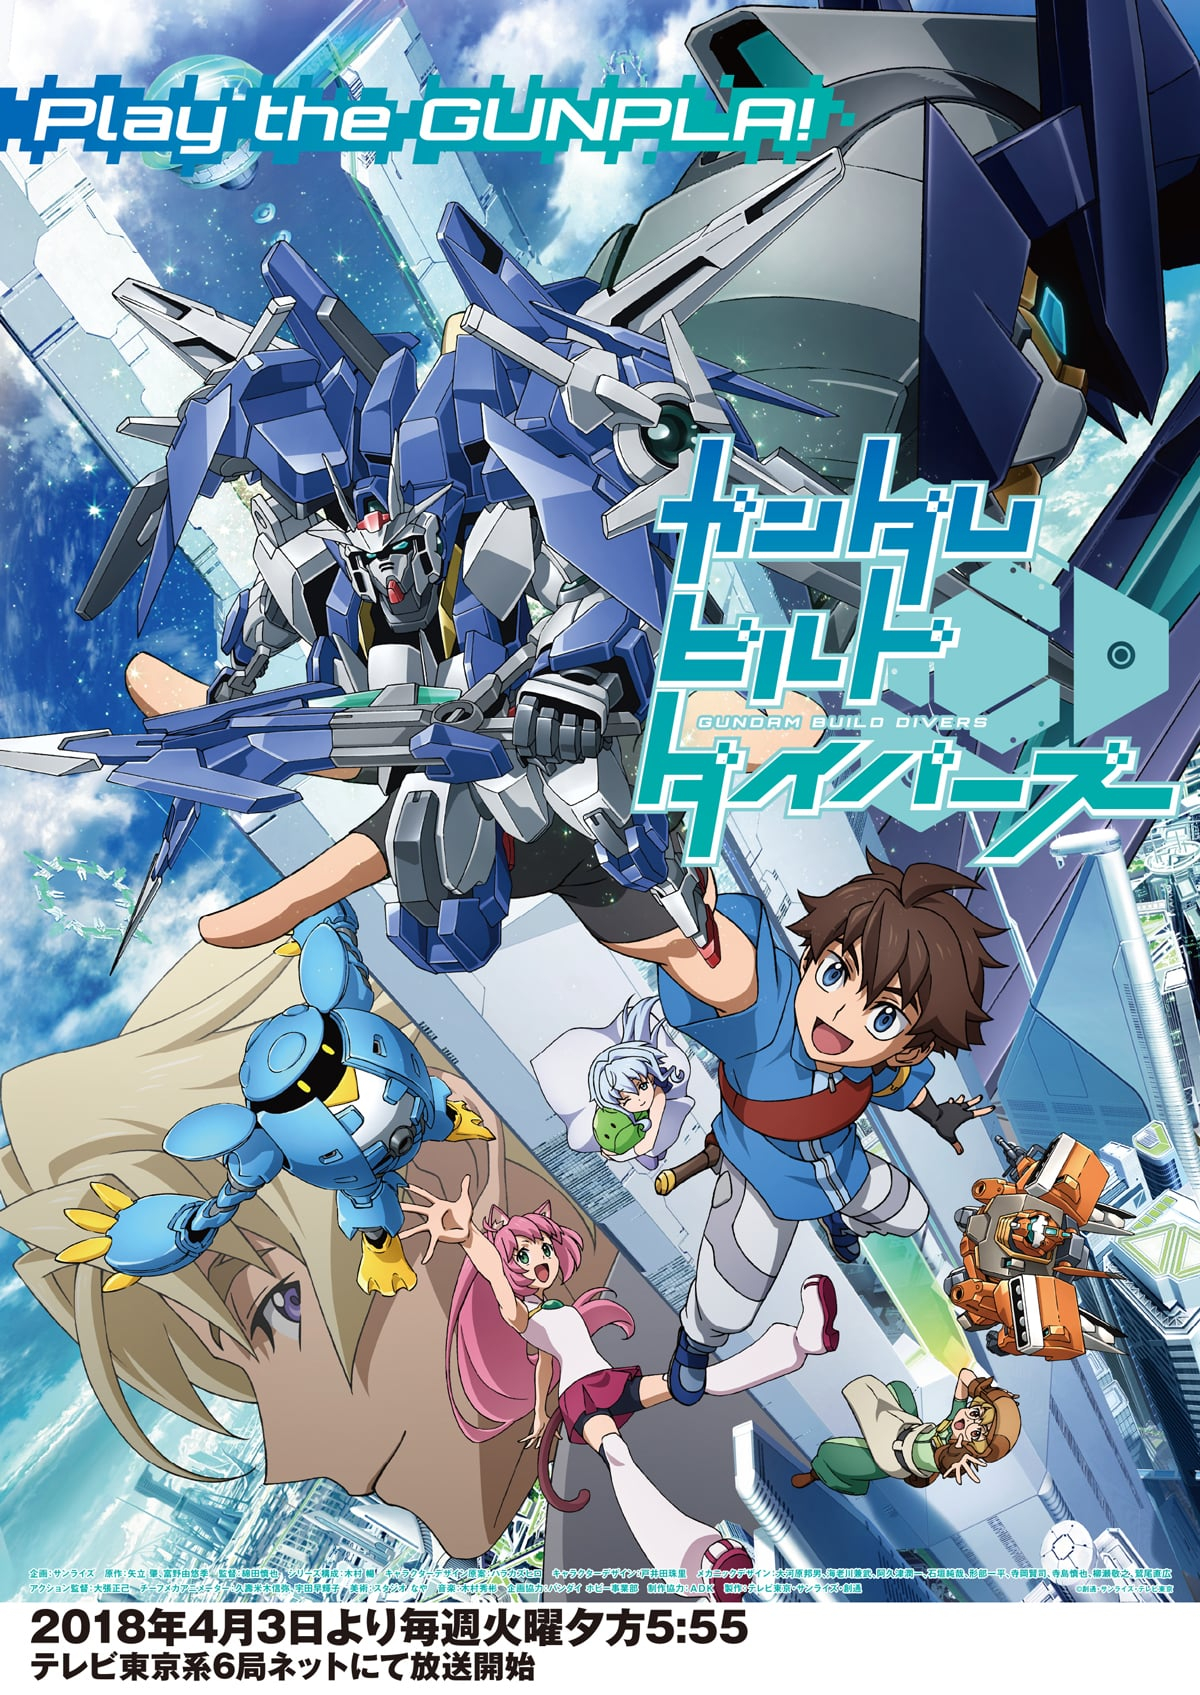 Gundam_Build_Divers_Poster-min.jpg